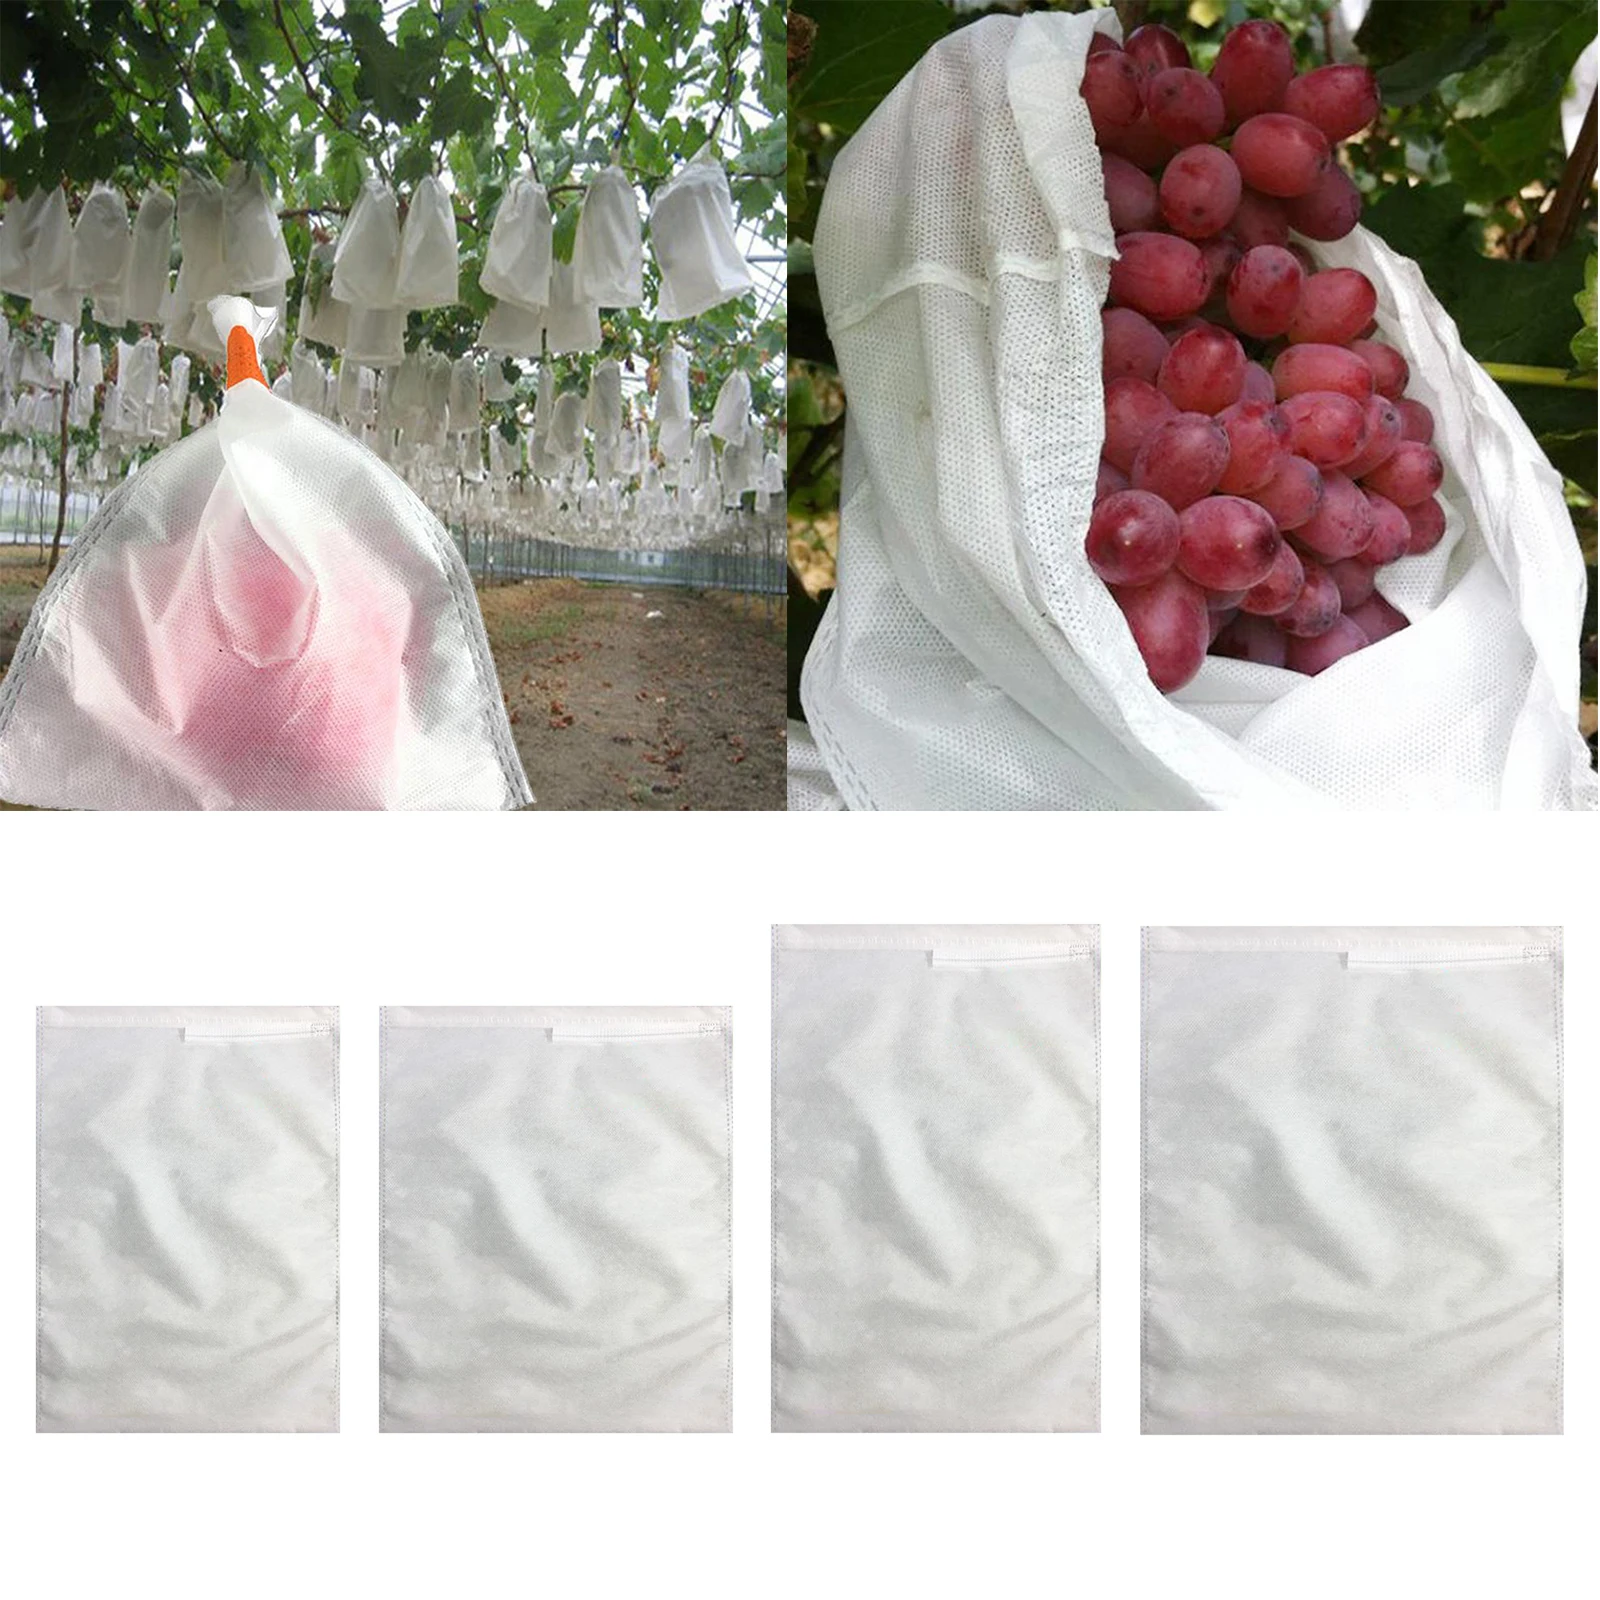 100x Plant Fruit Bag Strawberry Grape Breathable Growing Breeding Nursery Vegetables Non-Woven Bags Anti Pest